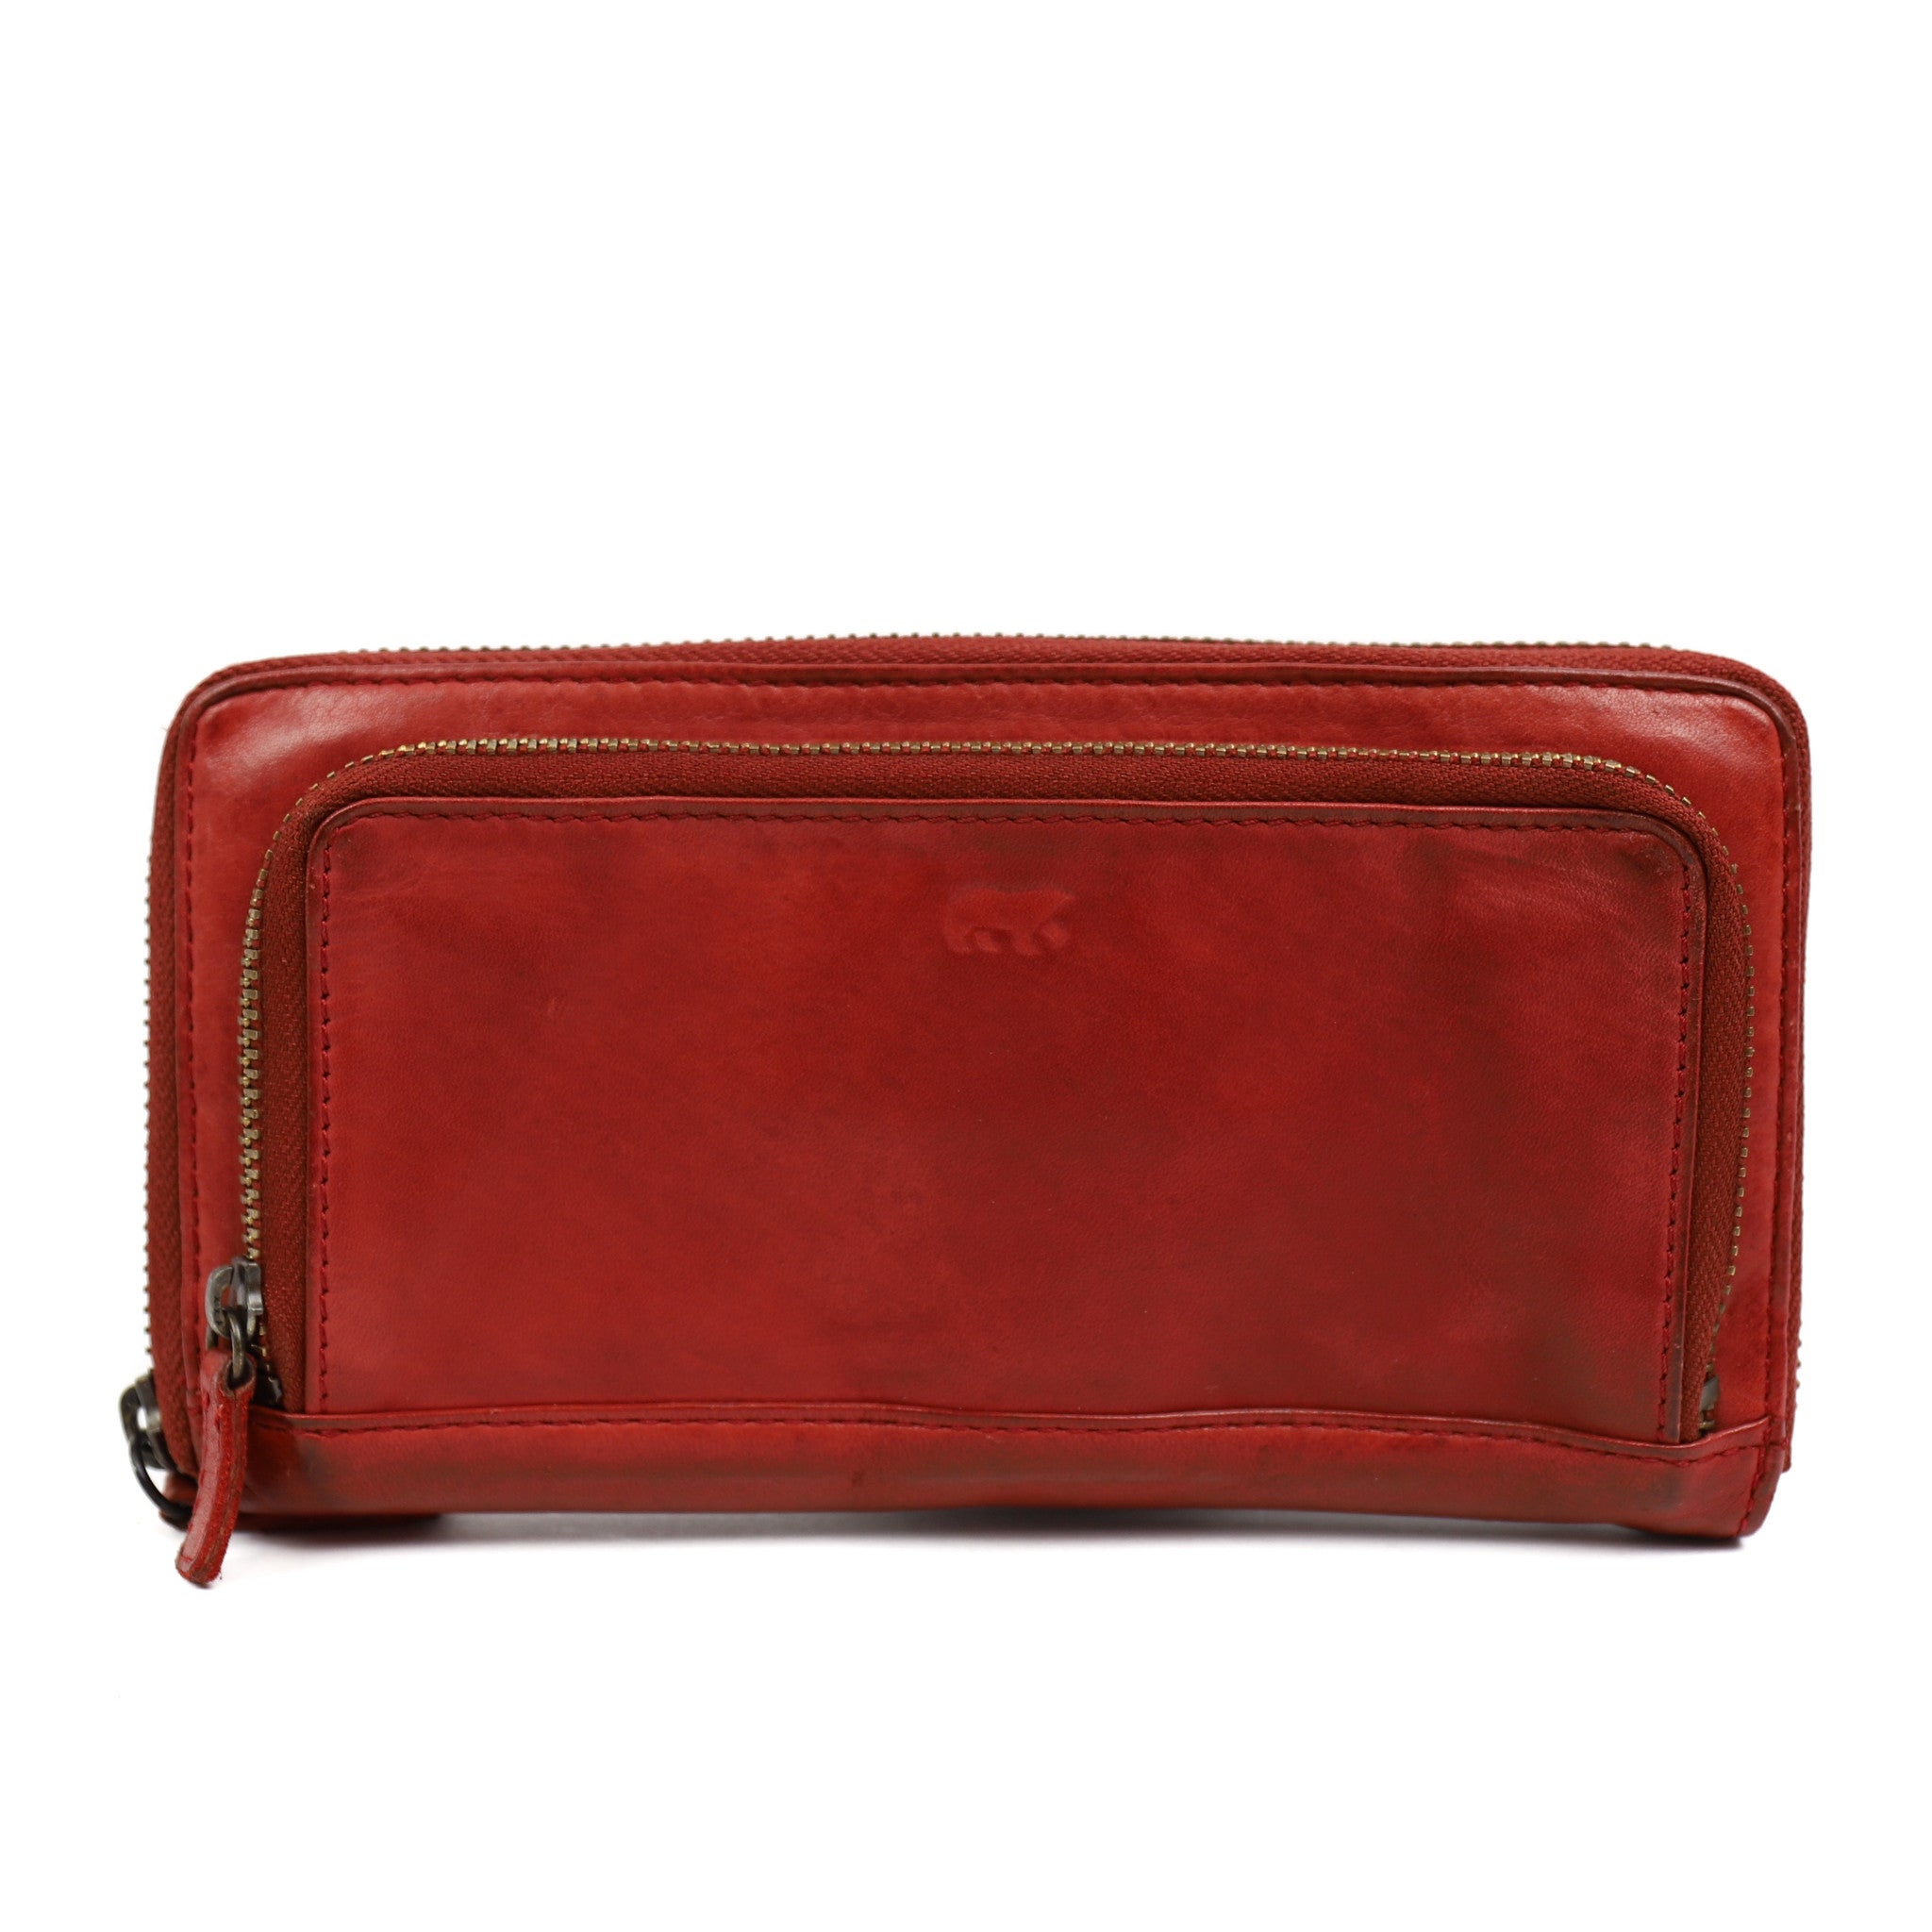 Zipper wallet 'Isa' red - CL 14851